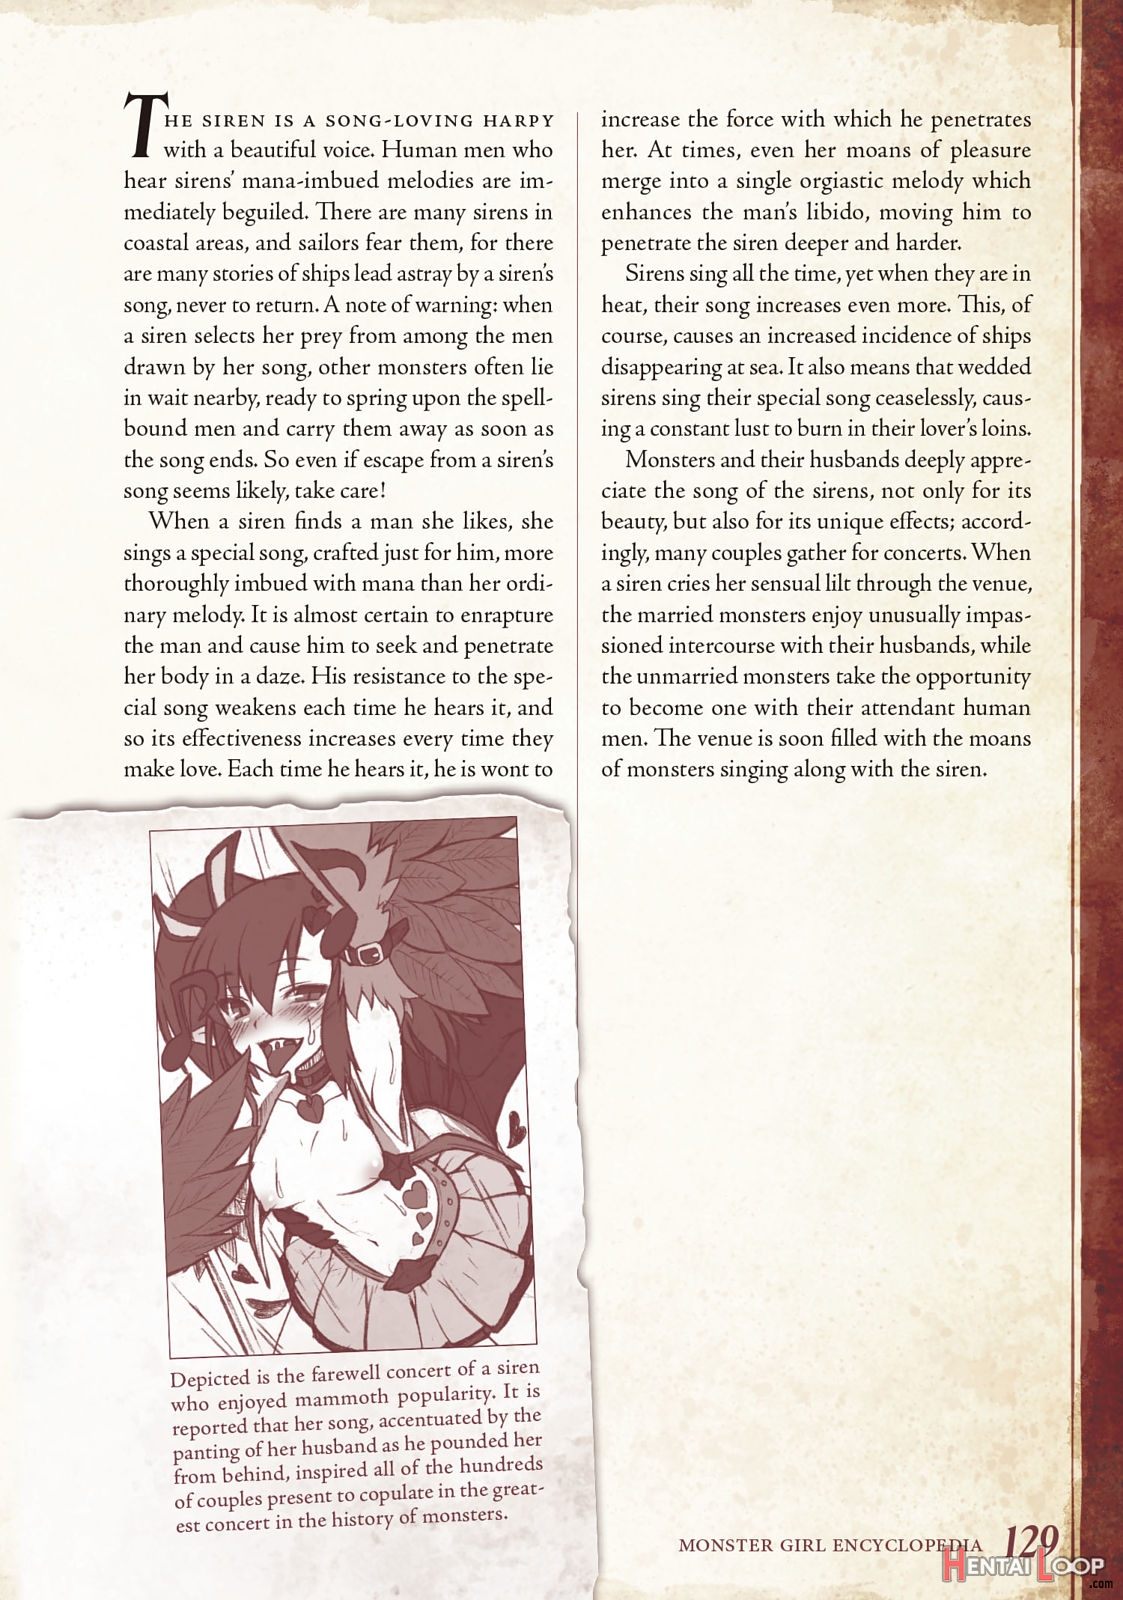 Monster Girl Encyclopedia Vol. 1 page 130